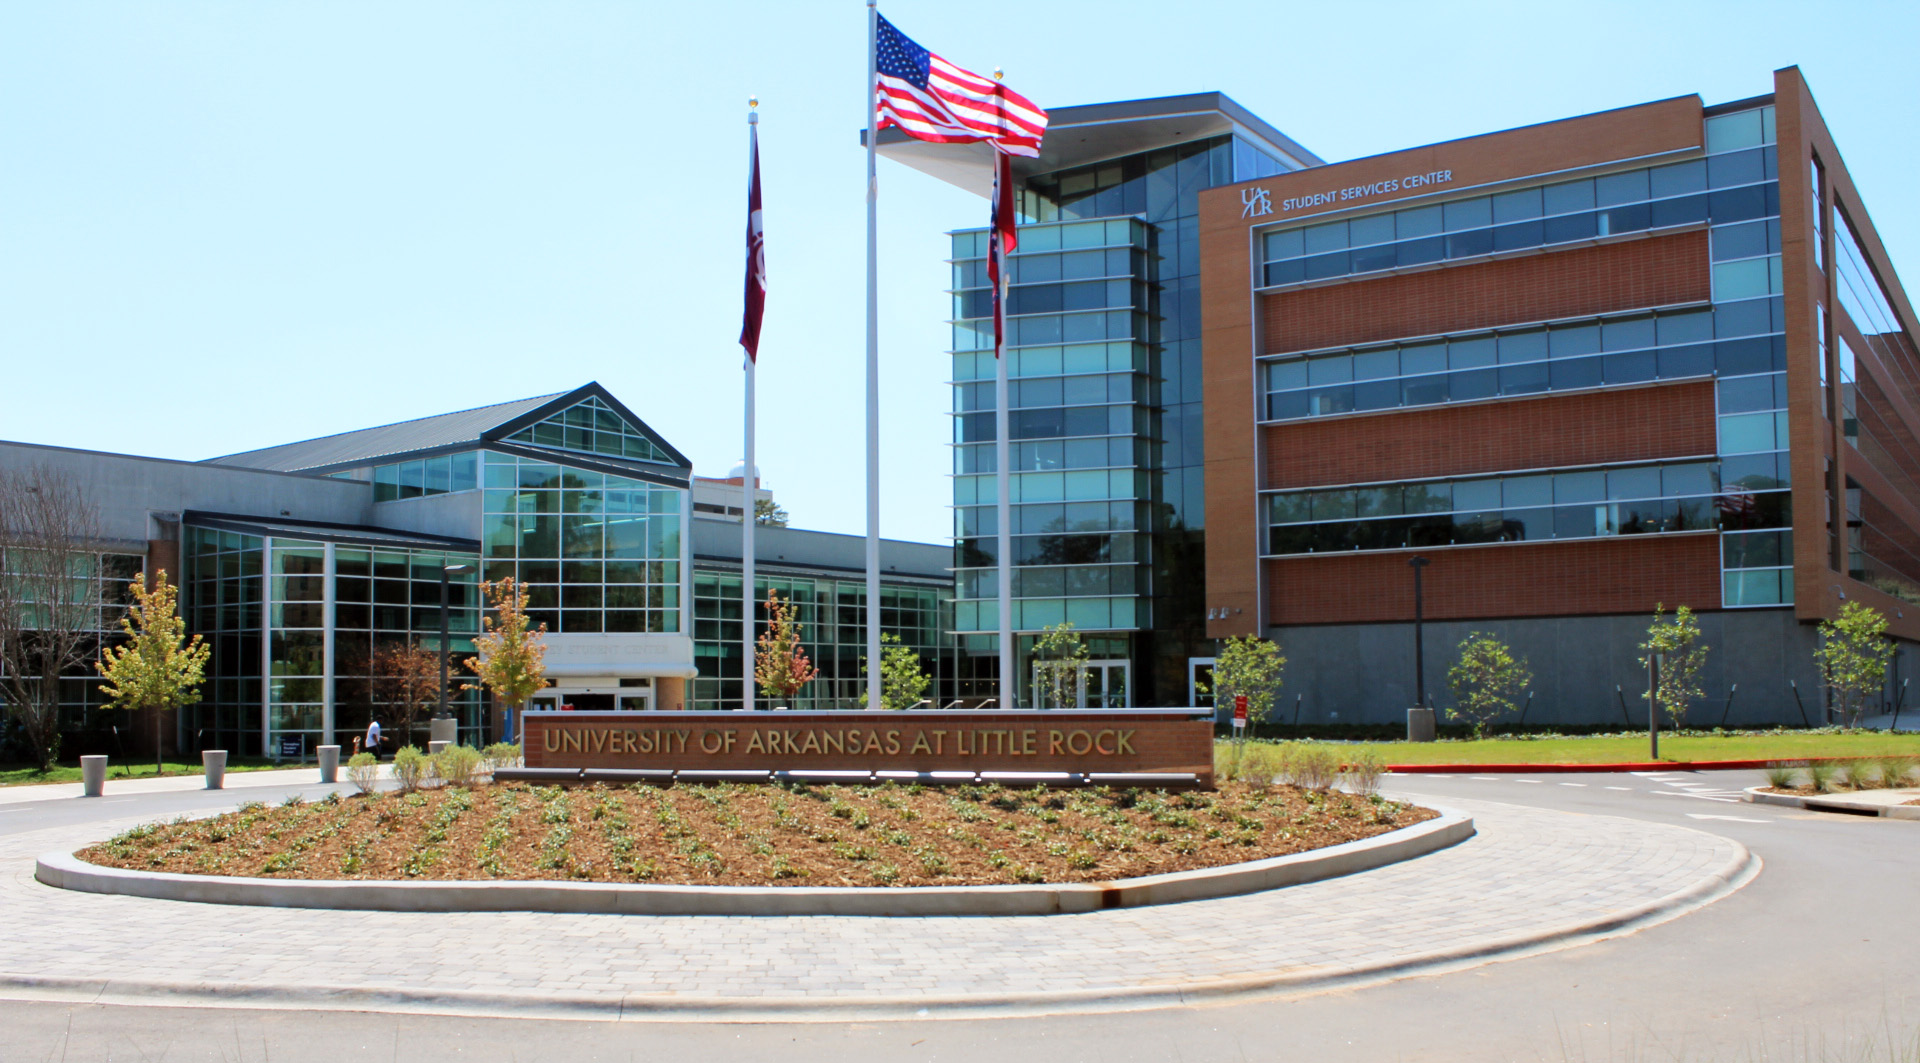 Campus Service Center